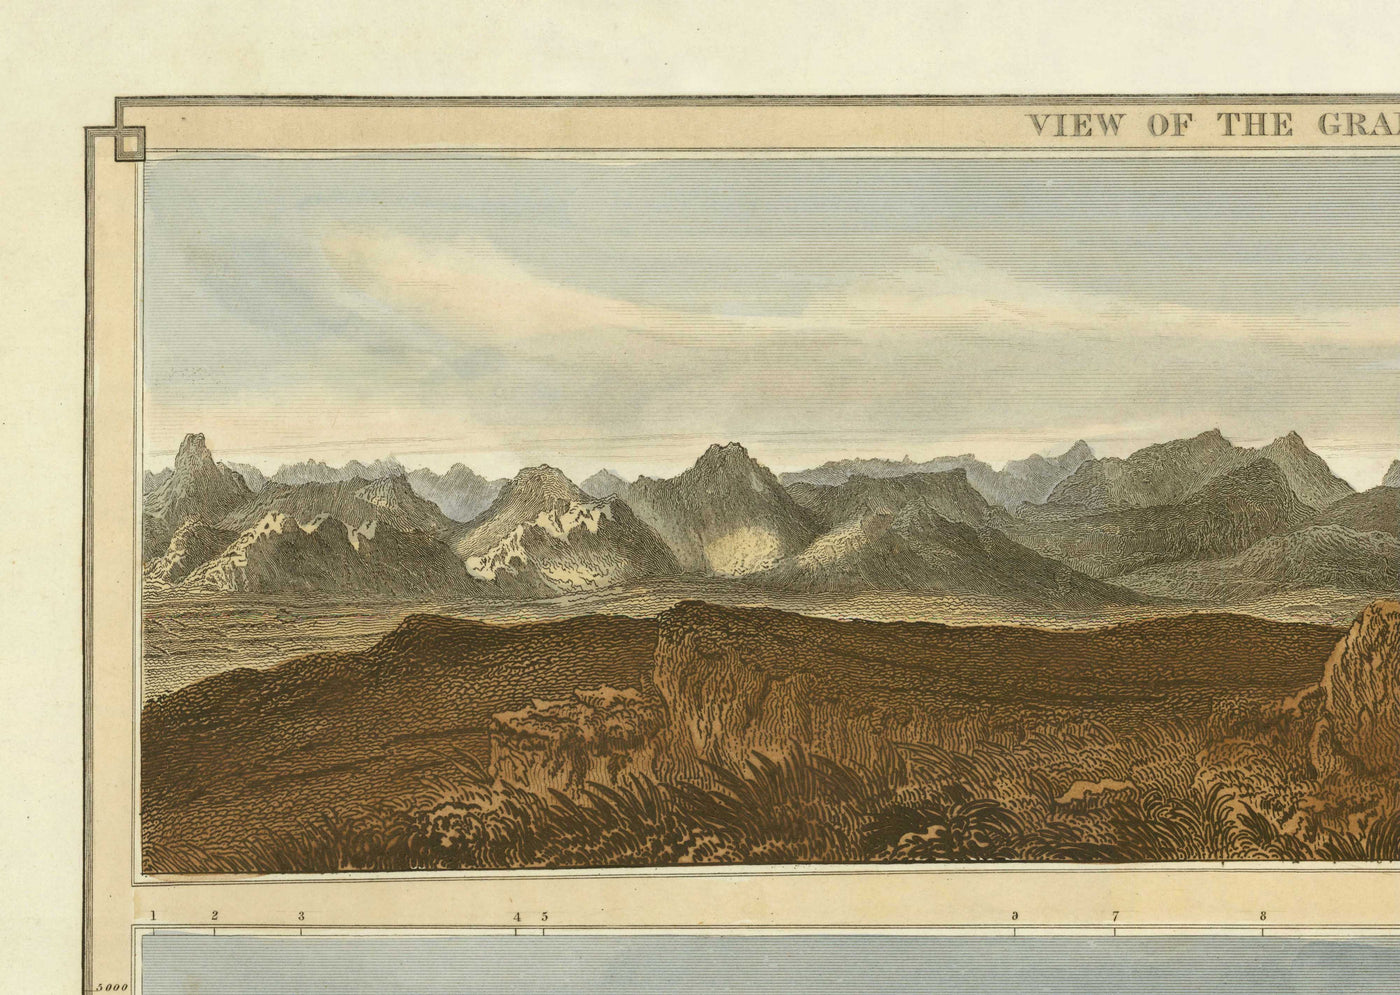 Old Map of the Hills of Scotland in 1832 by John Thomson - The Highlands, Ben Nevis, Loch na Garr, Cairngorms, Ben Macdui, Ben Venue